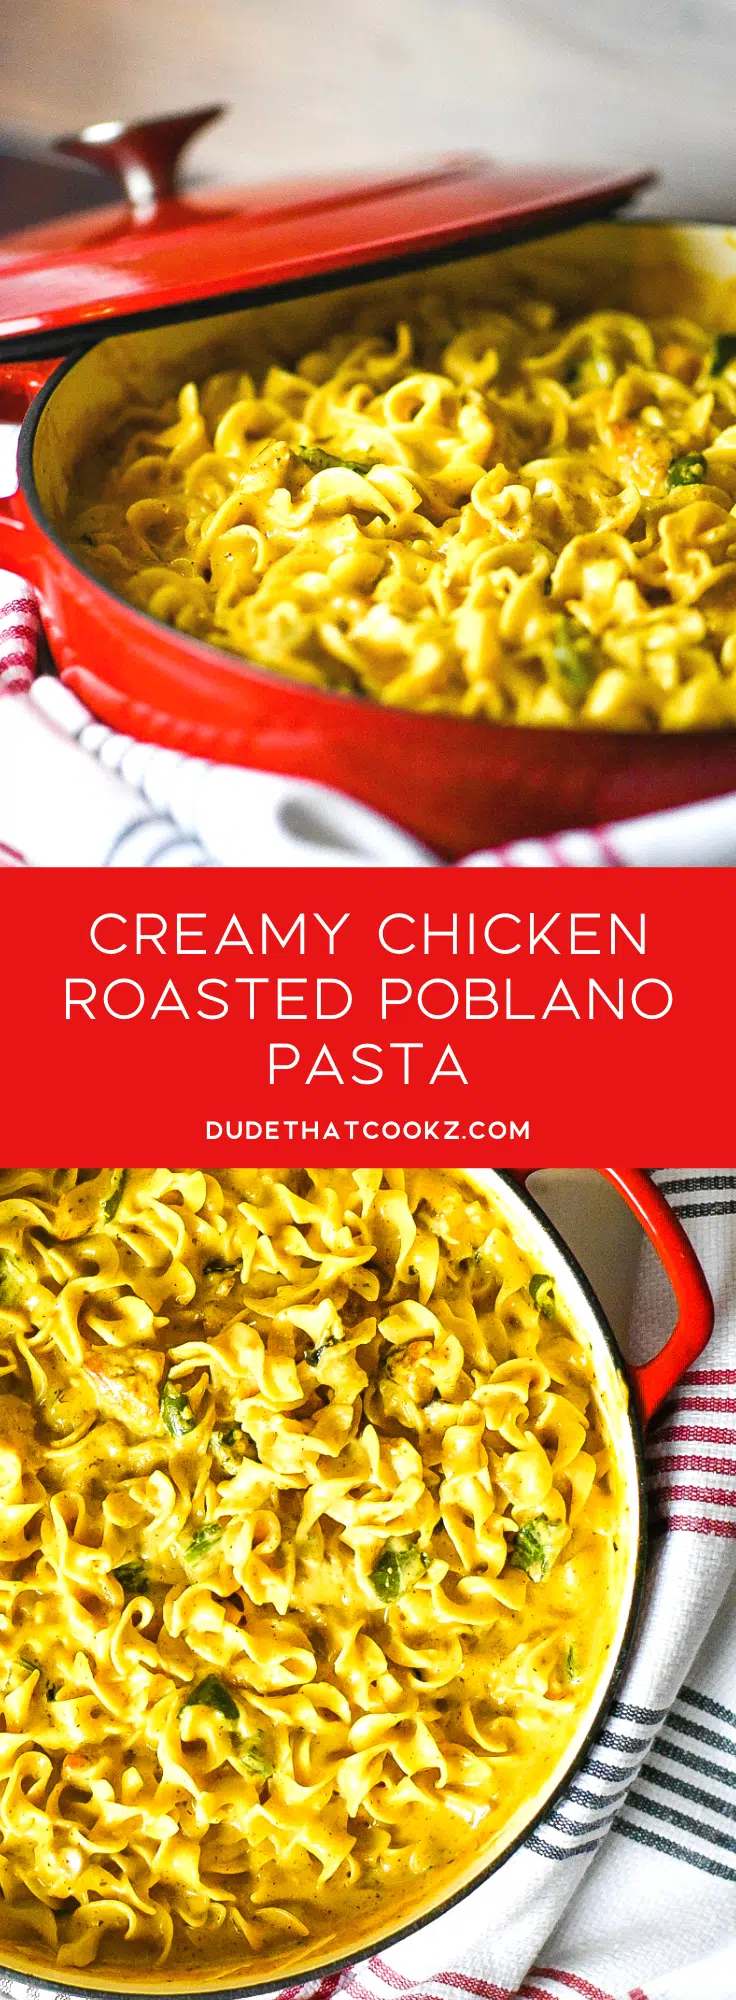 Creamy Chicken Roasted Poblano Pasta